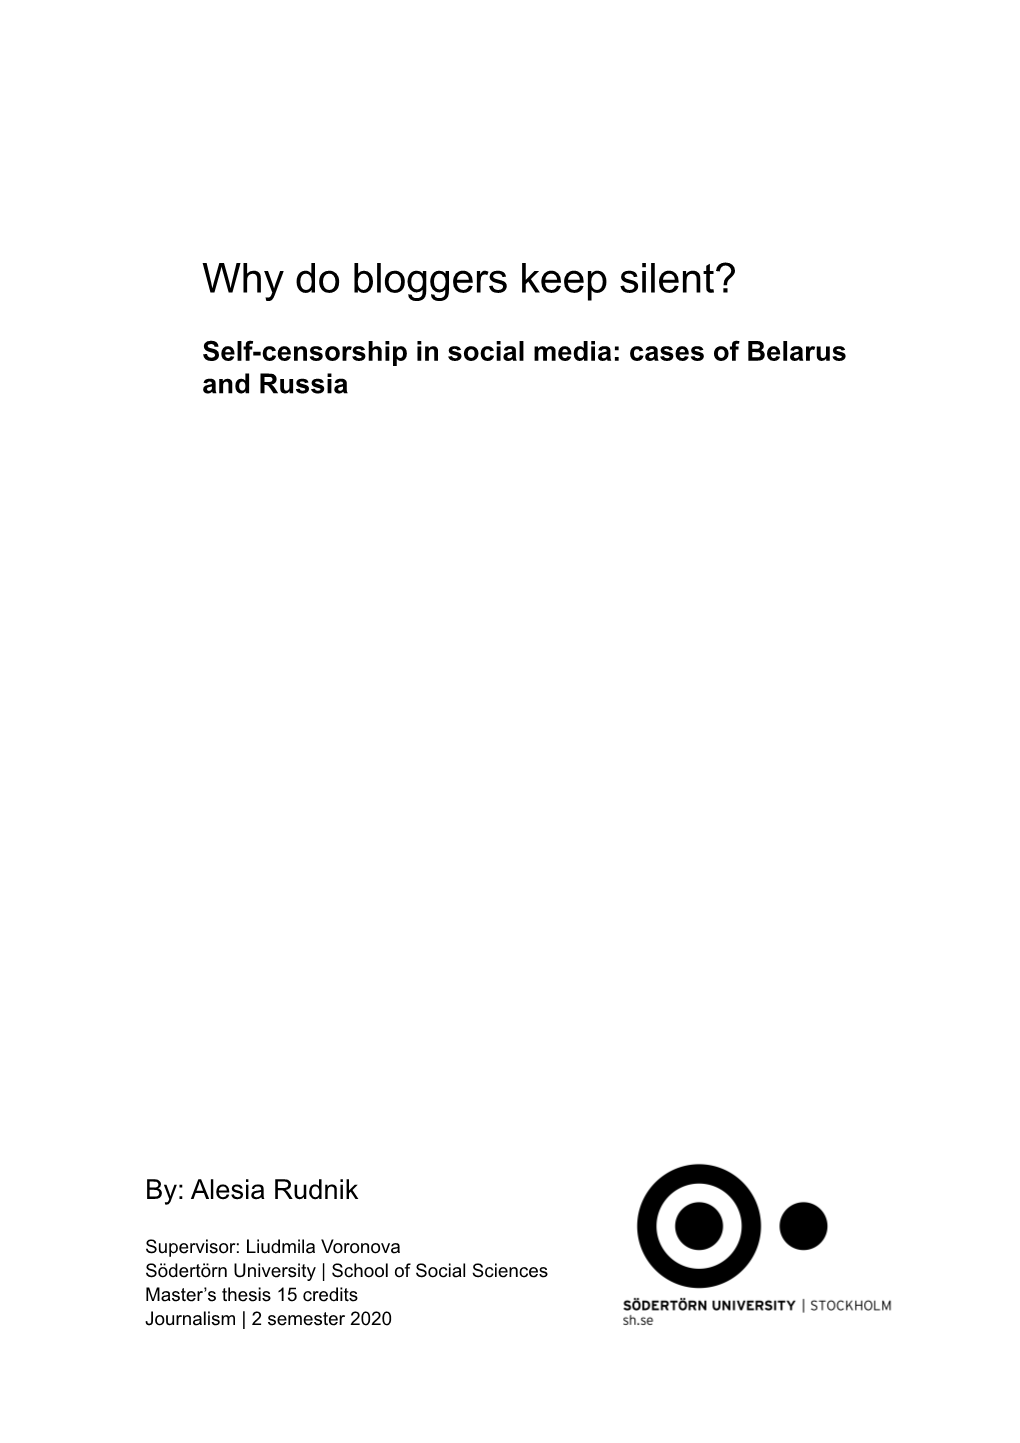 Why Do Bloggers Keep Silent?